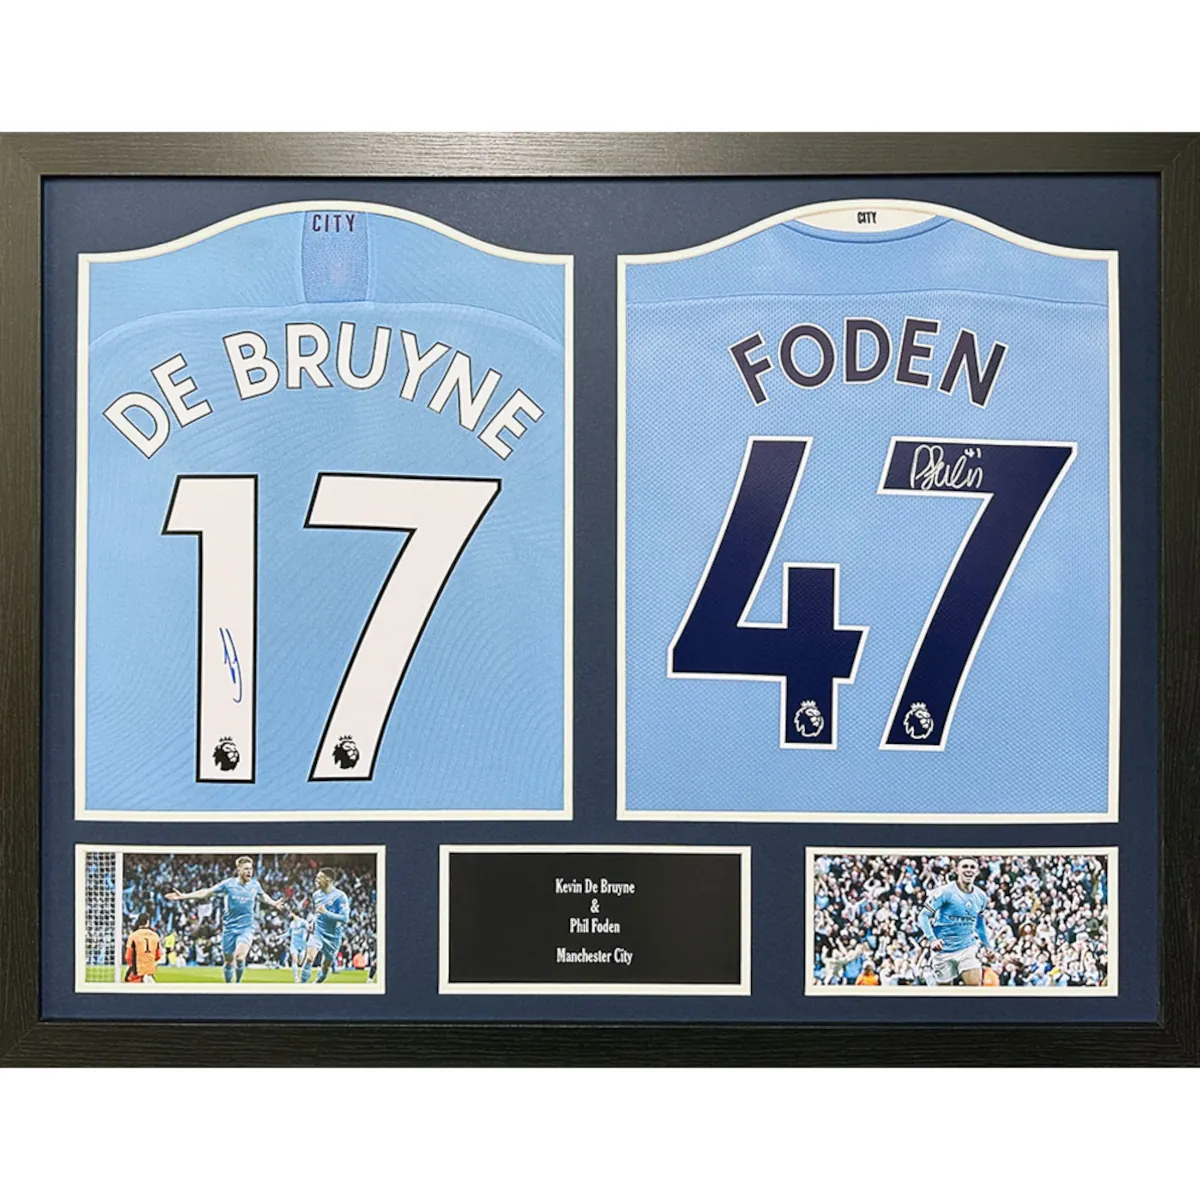 TM-02721 Manchester City F.C. De Bruyne & Foden Dual Framed Signed 2020-2021 Season Replica Football Shirts